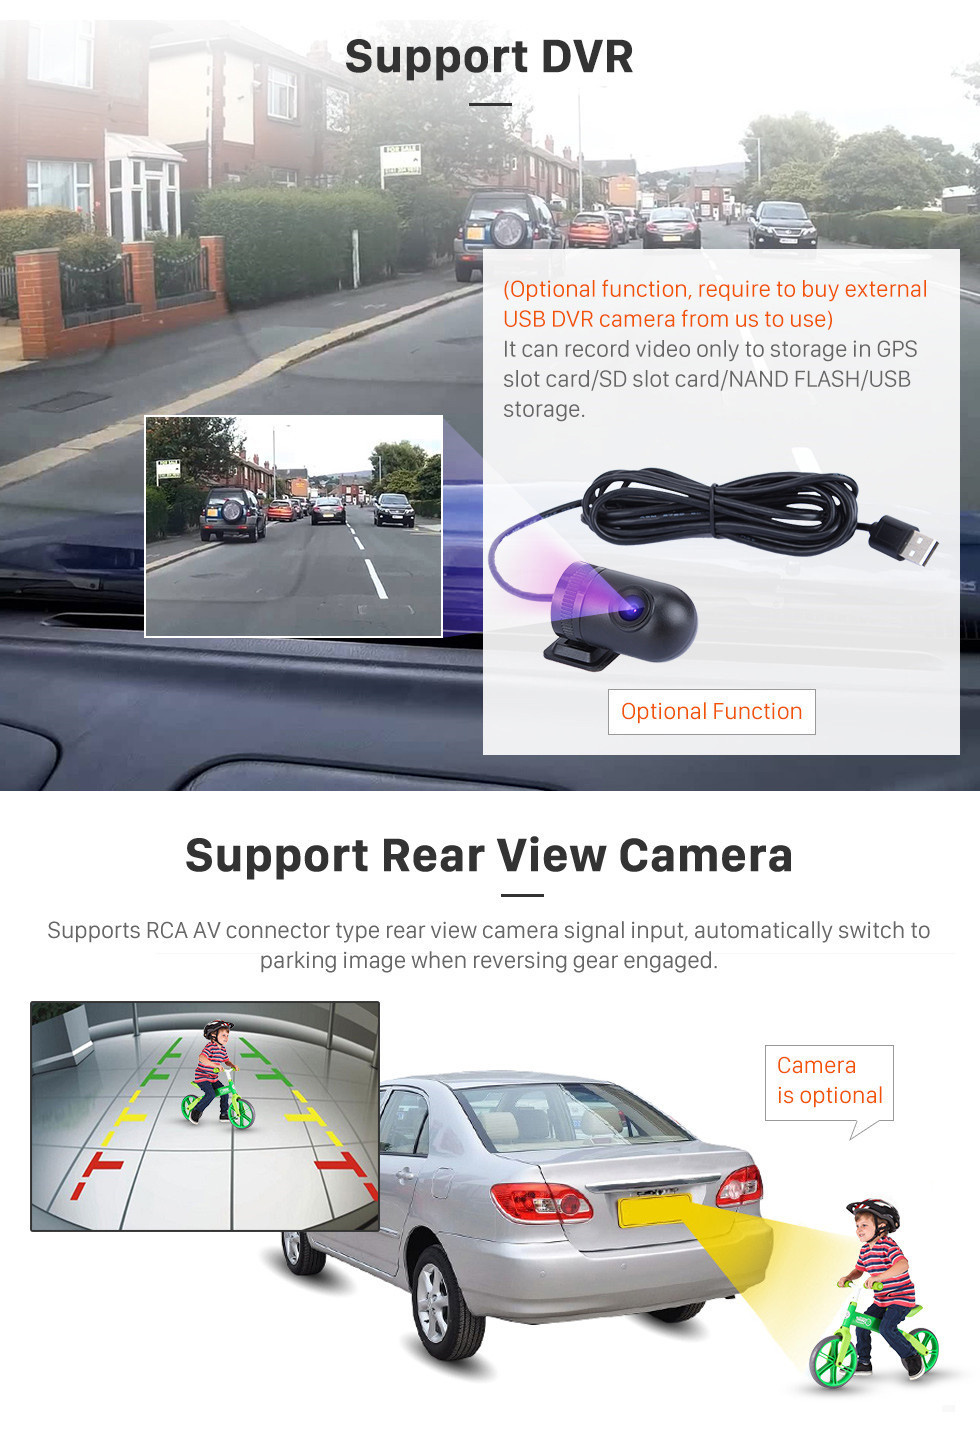 Seicane 9 inch 2015-2018 Skoda New Fabia Android 11.0 GPS Navigation Radio Bluetooth HD Touchscreen AUX USB WIFI Carplay support OBD2 1080P